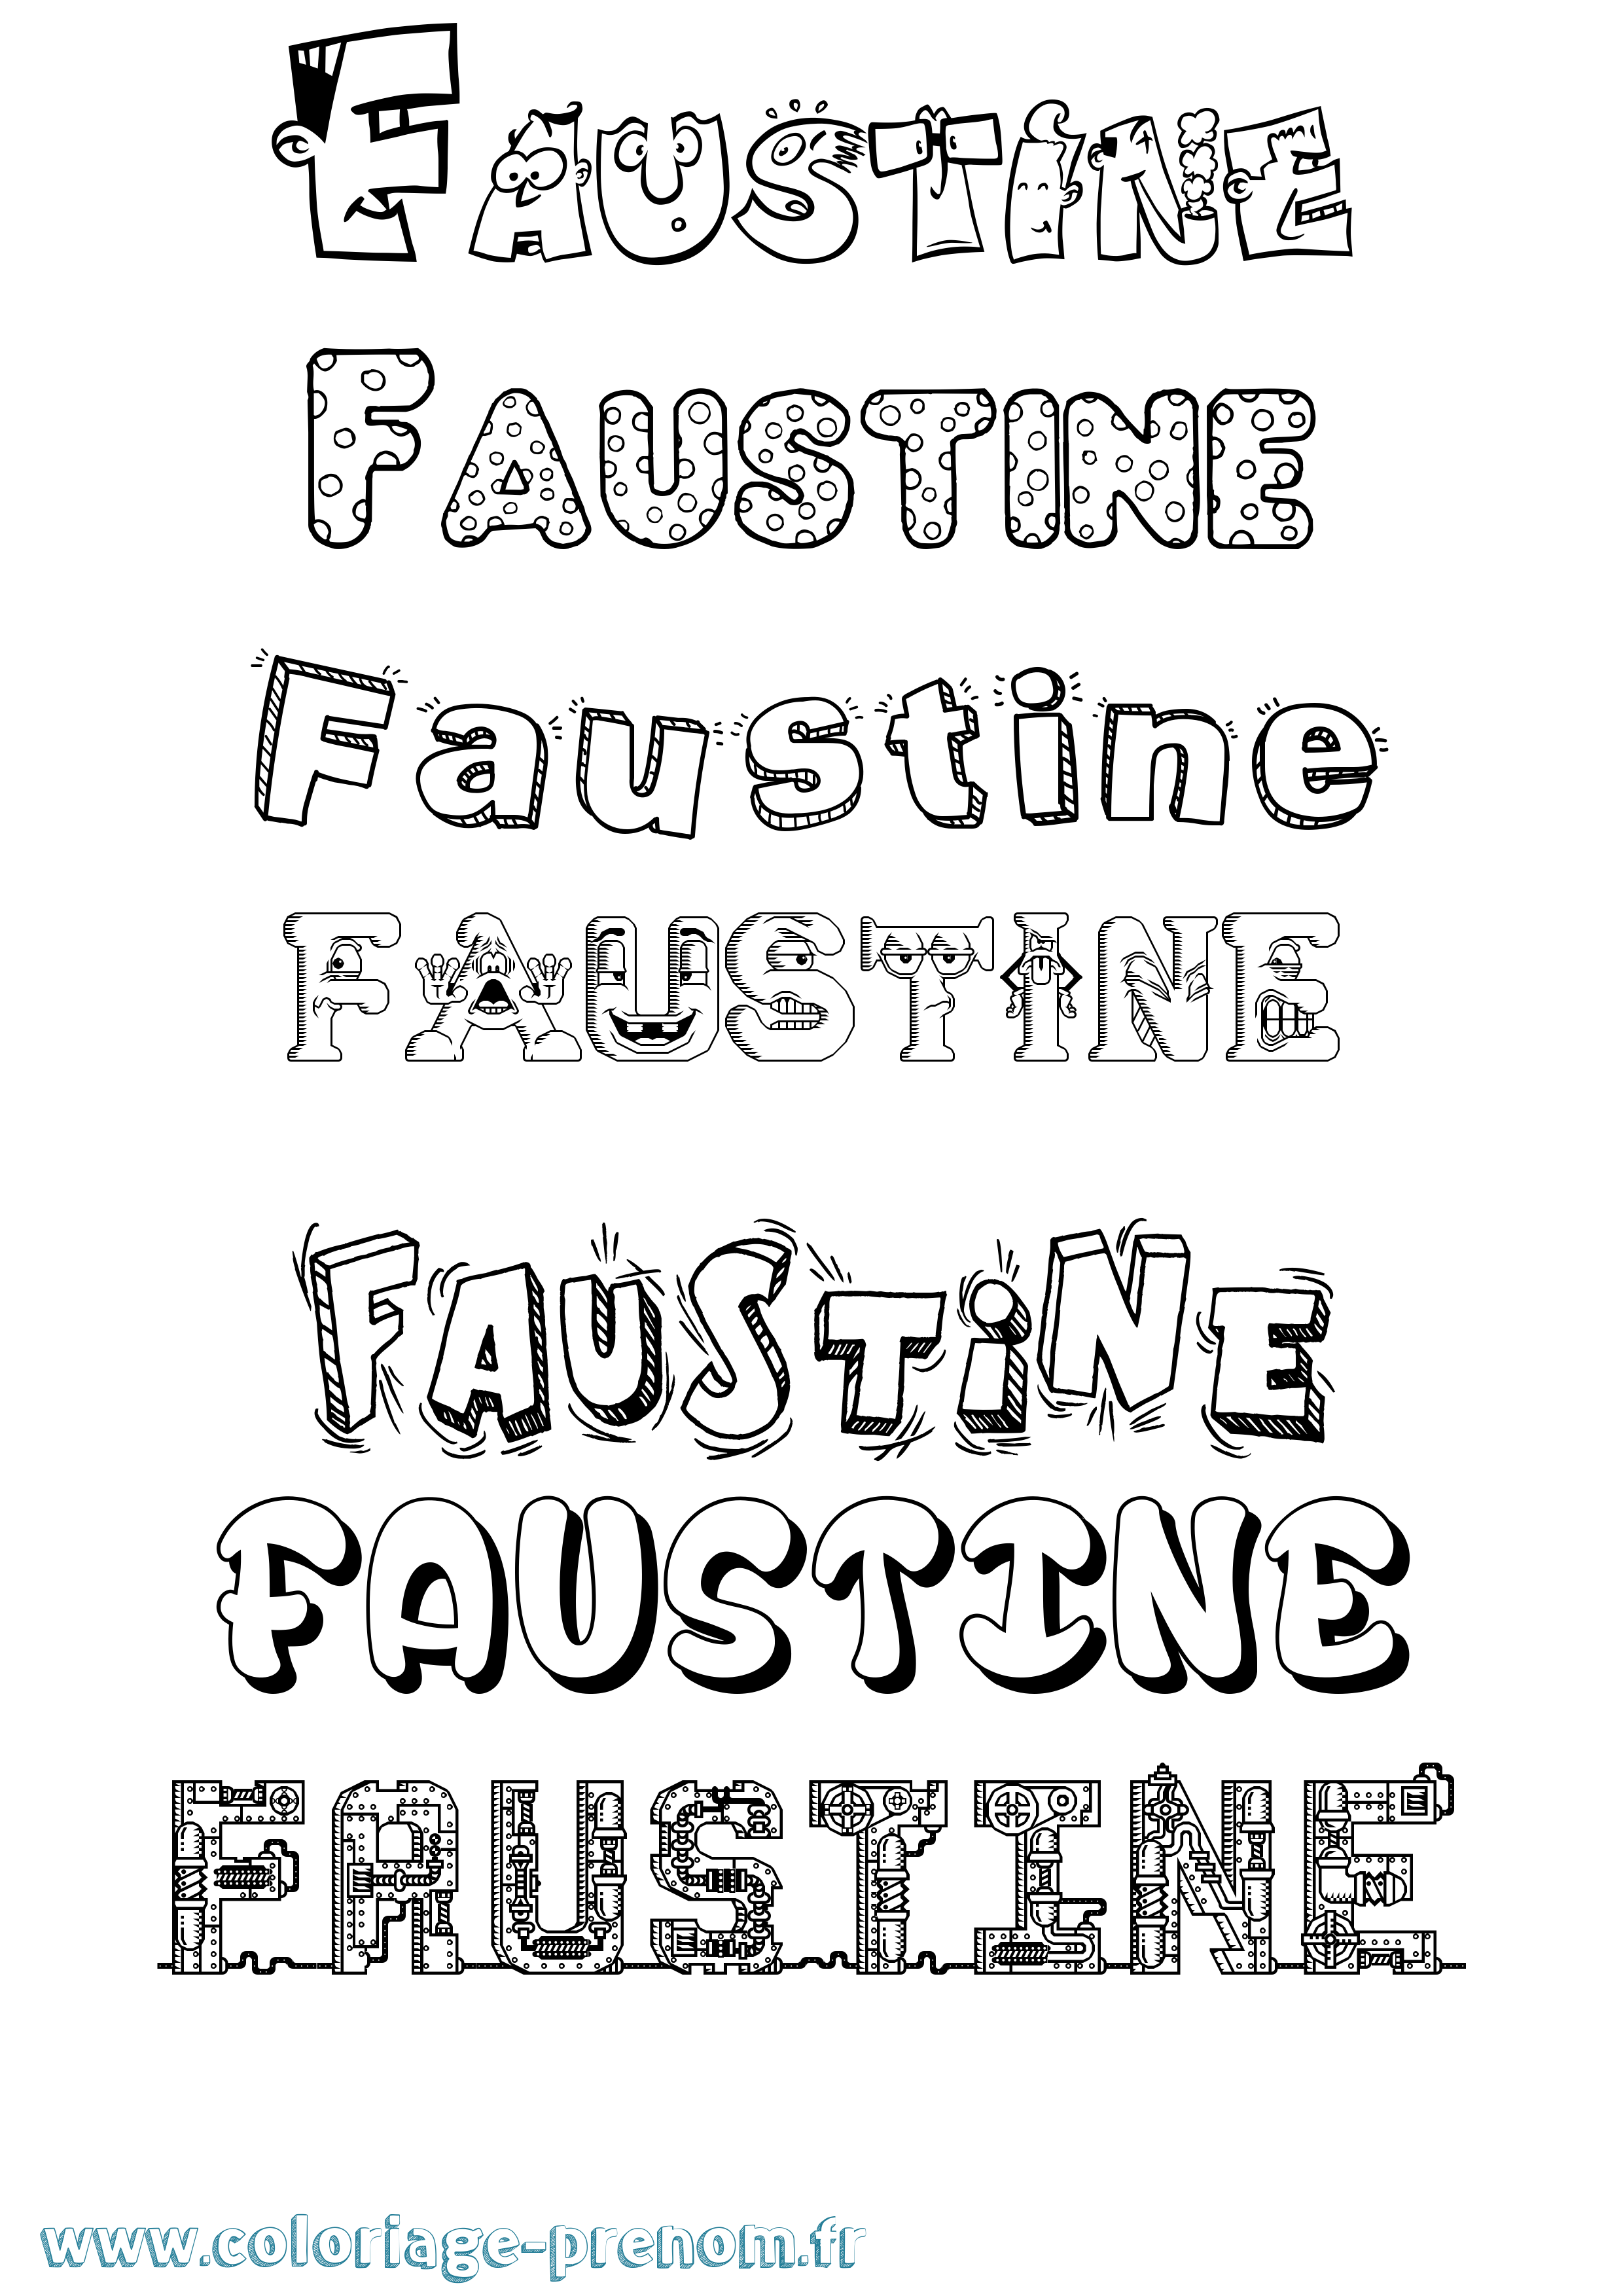 Coloriage prénom Faustine